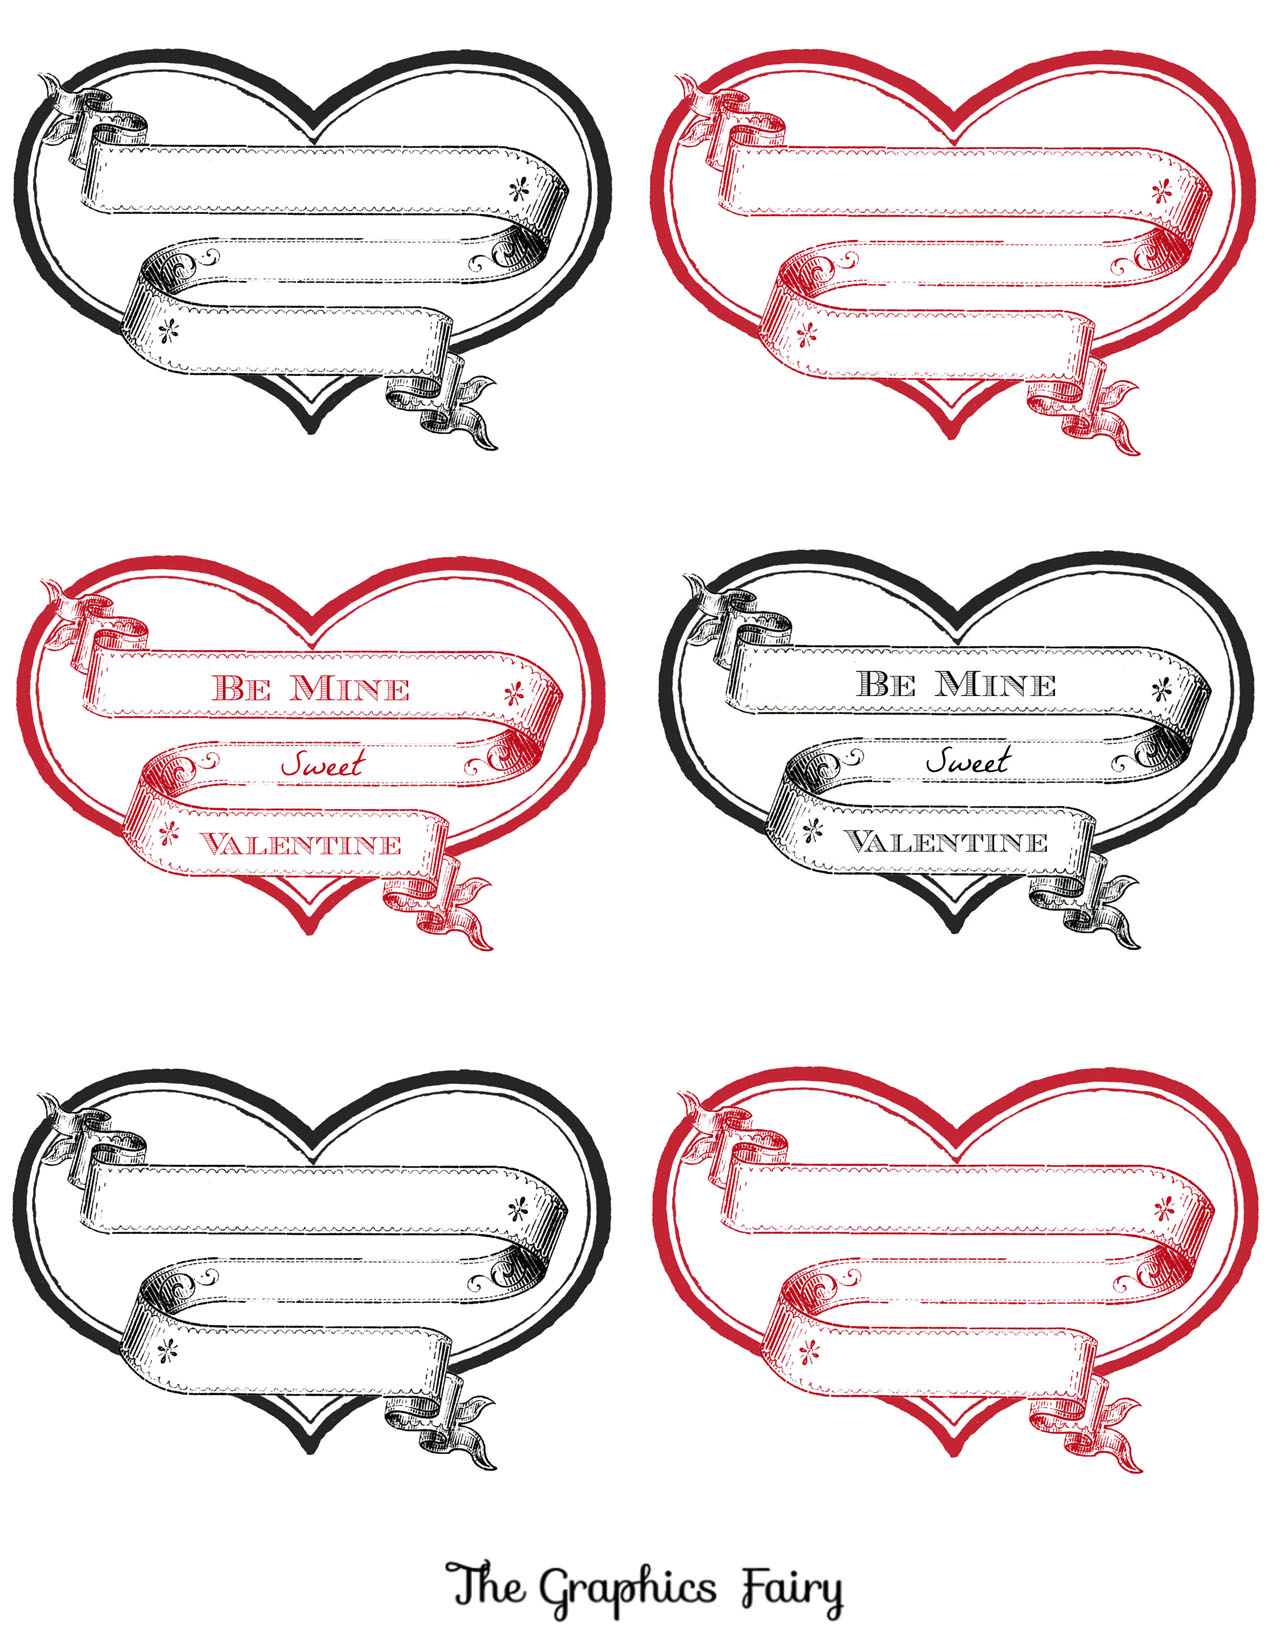 Valentine's Day Stickers - Print then Cut